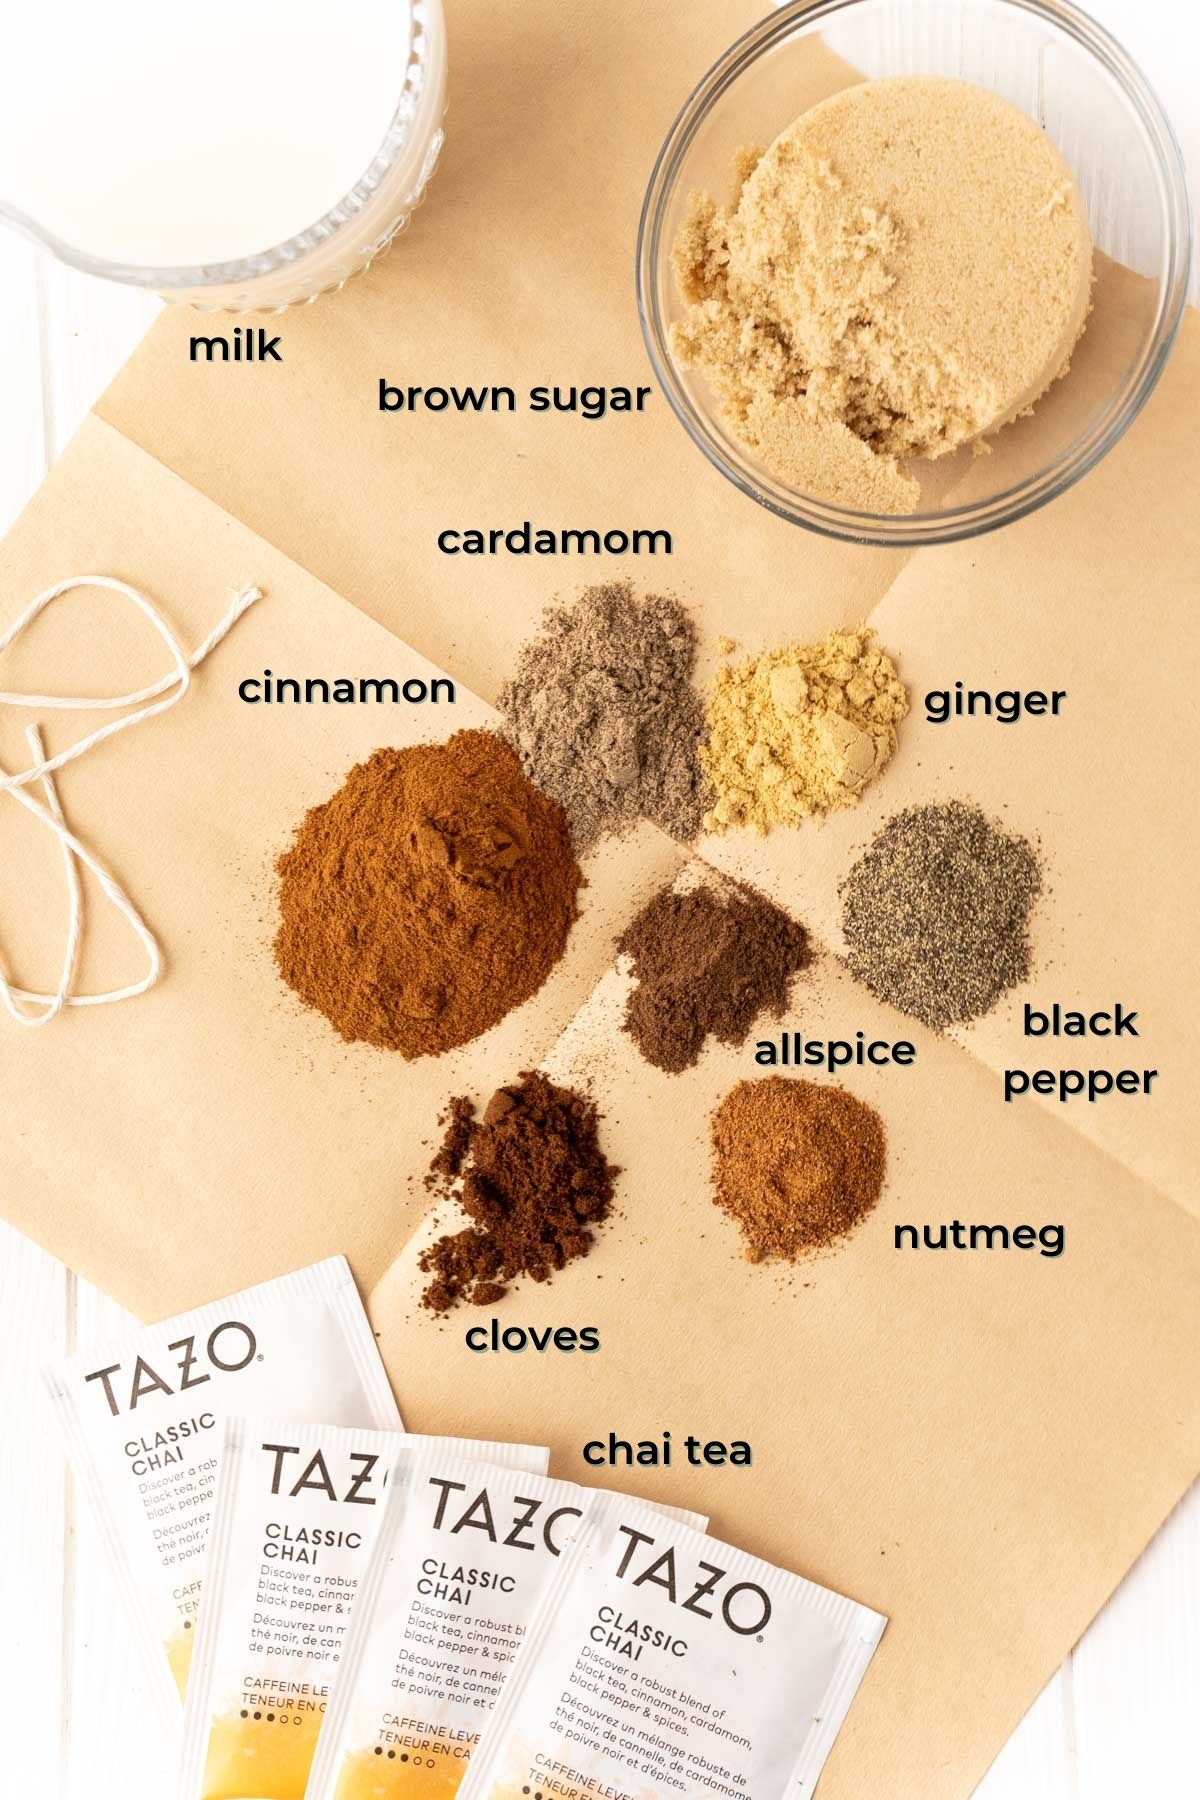 Overhead photo of ingredients used to make iced chai tea latte.